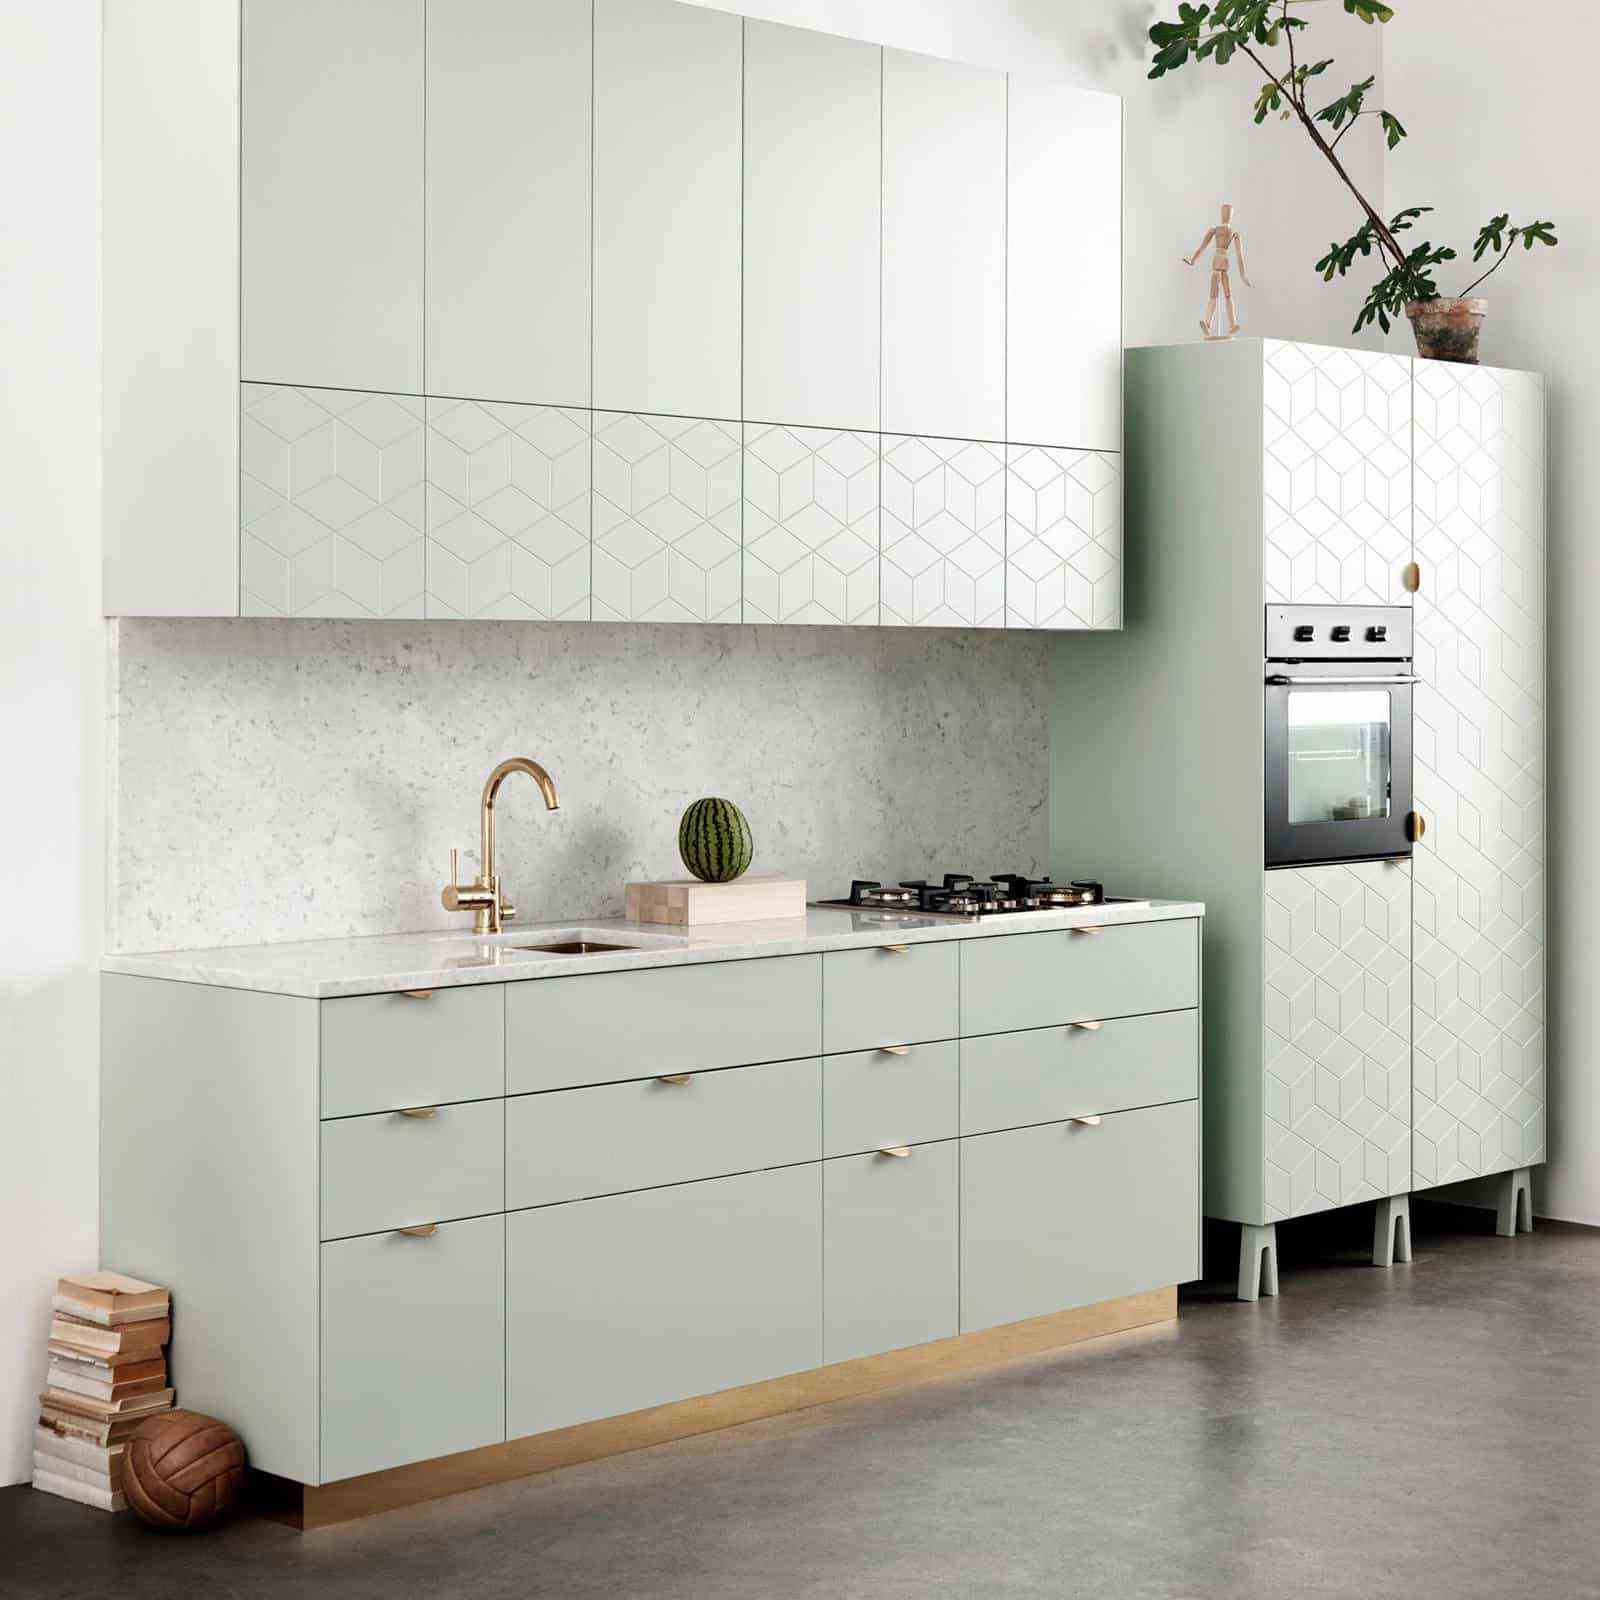 A kitchen with a precious design 